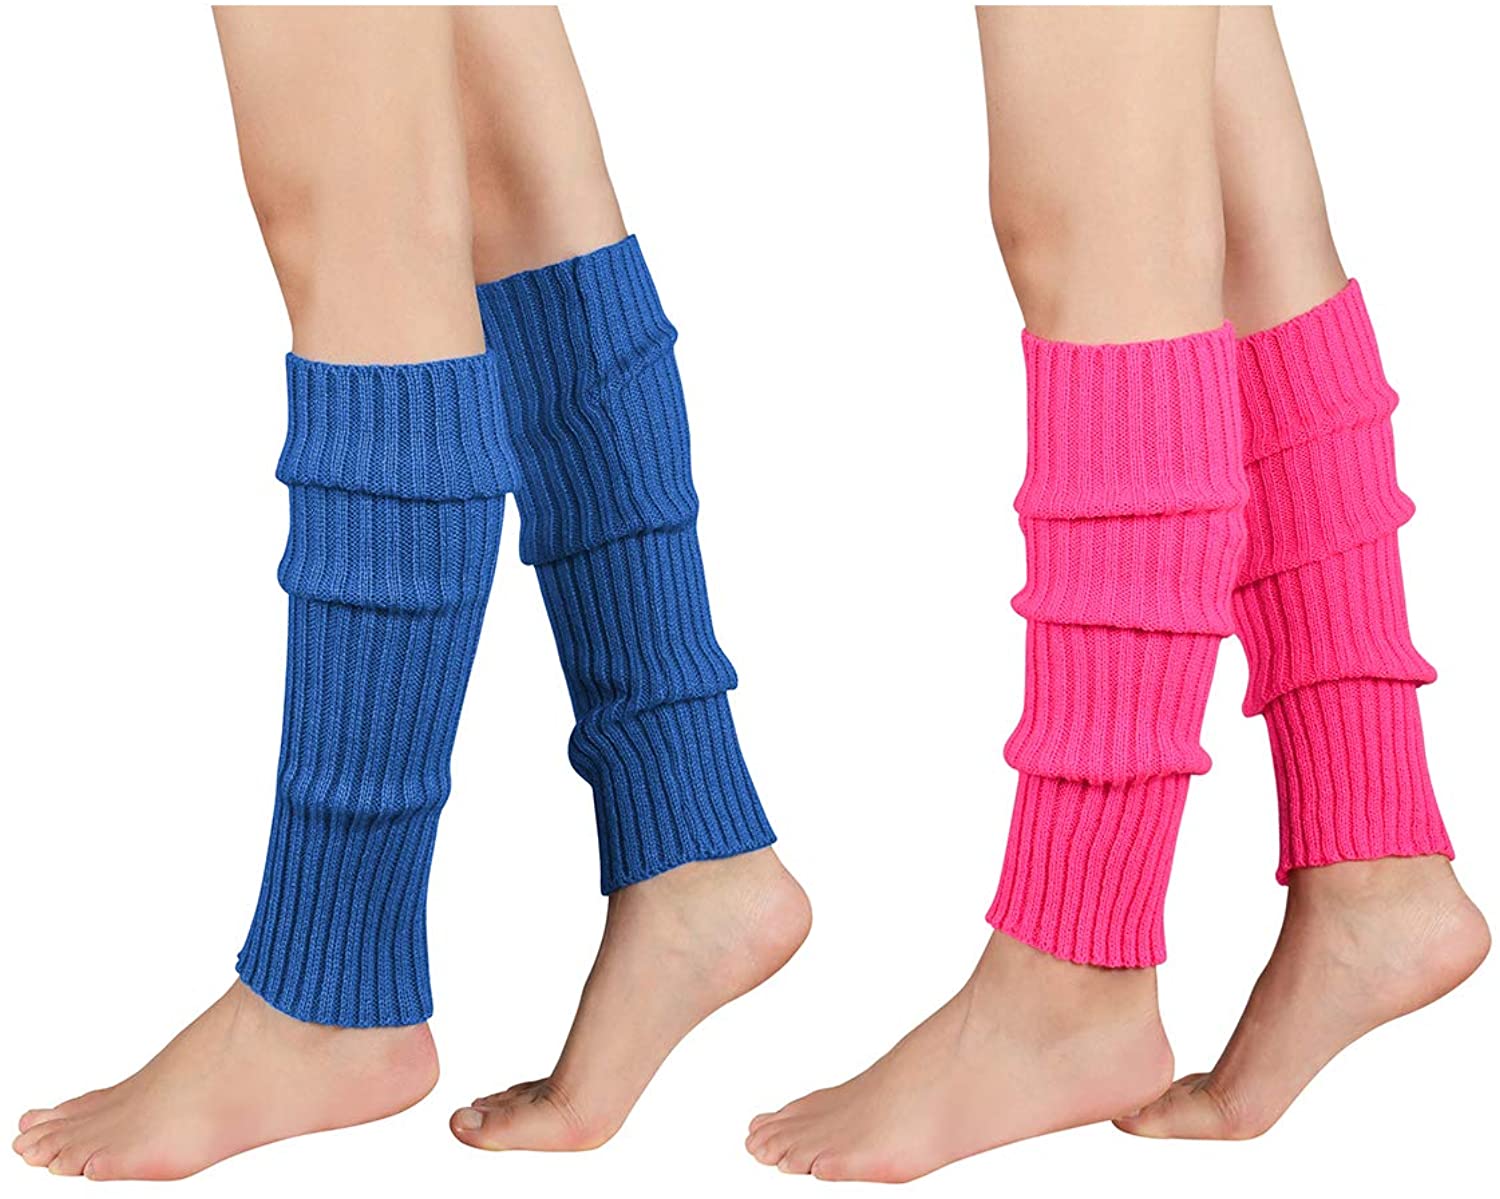 2 or 4 Pair Multipack Ladies Fancy Dress Knitted Pink & Blue 80s Retro Leg Warmers